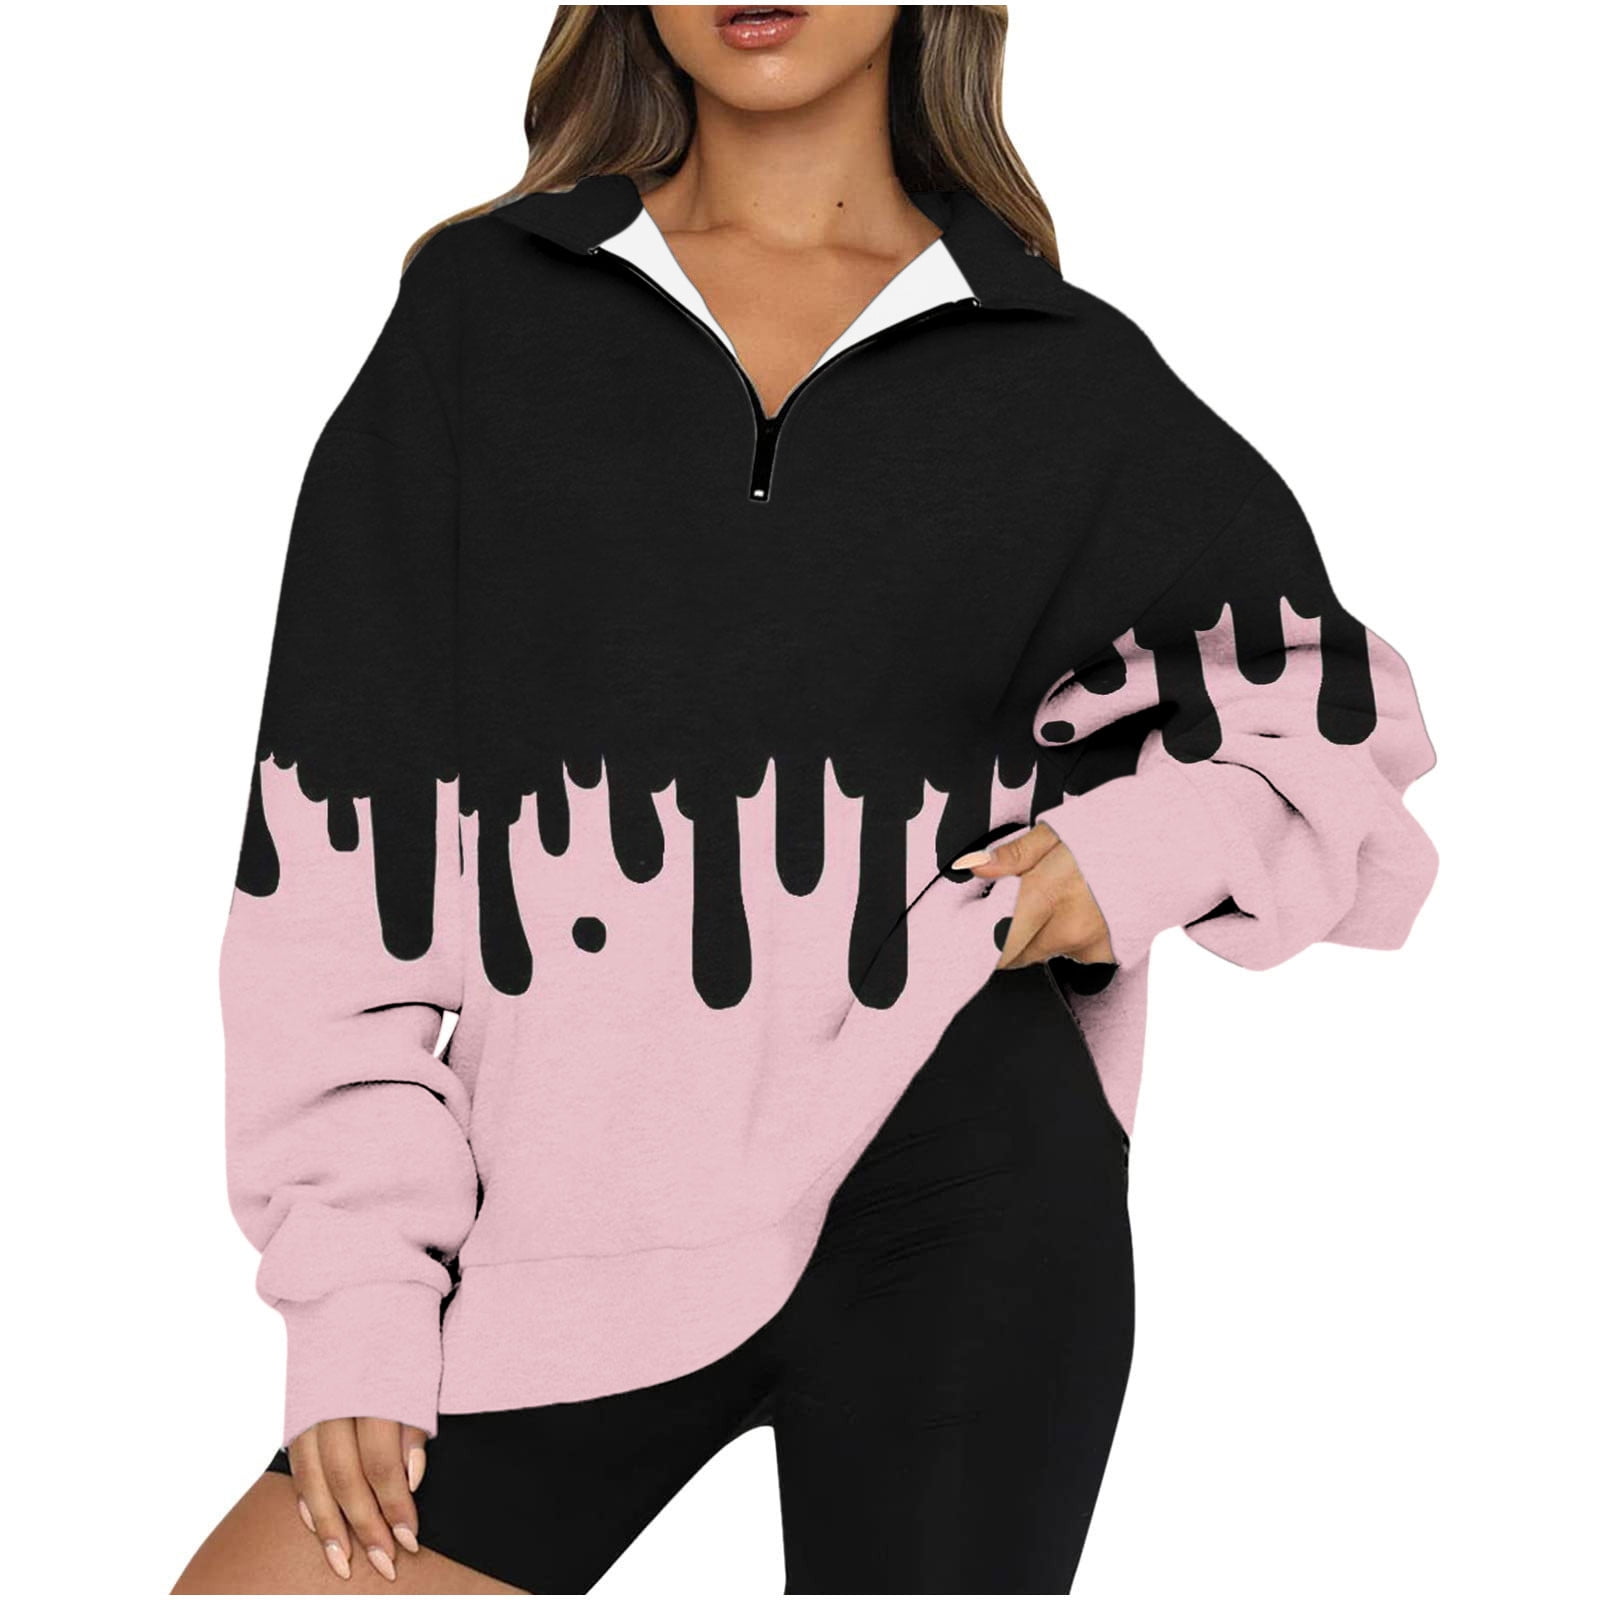 Yyeselk Women's Fuzzy Hoodies Sport Pullover Hoodie Solid Color Casual  Oversized Pockets Hooded Sweatshirt Fleece Hoodie Blouse Shirt Tops Pink XL  